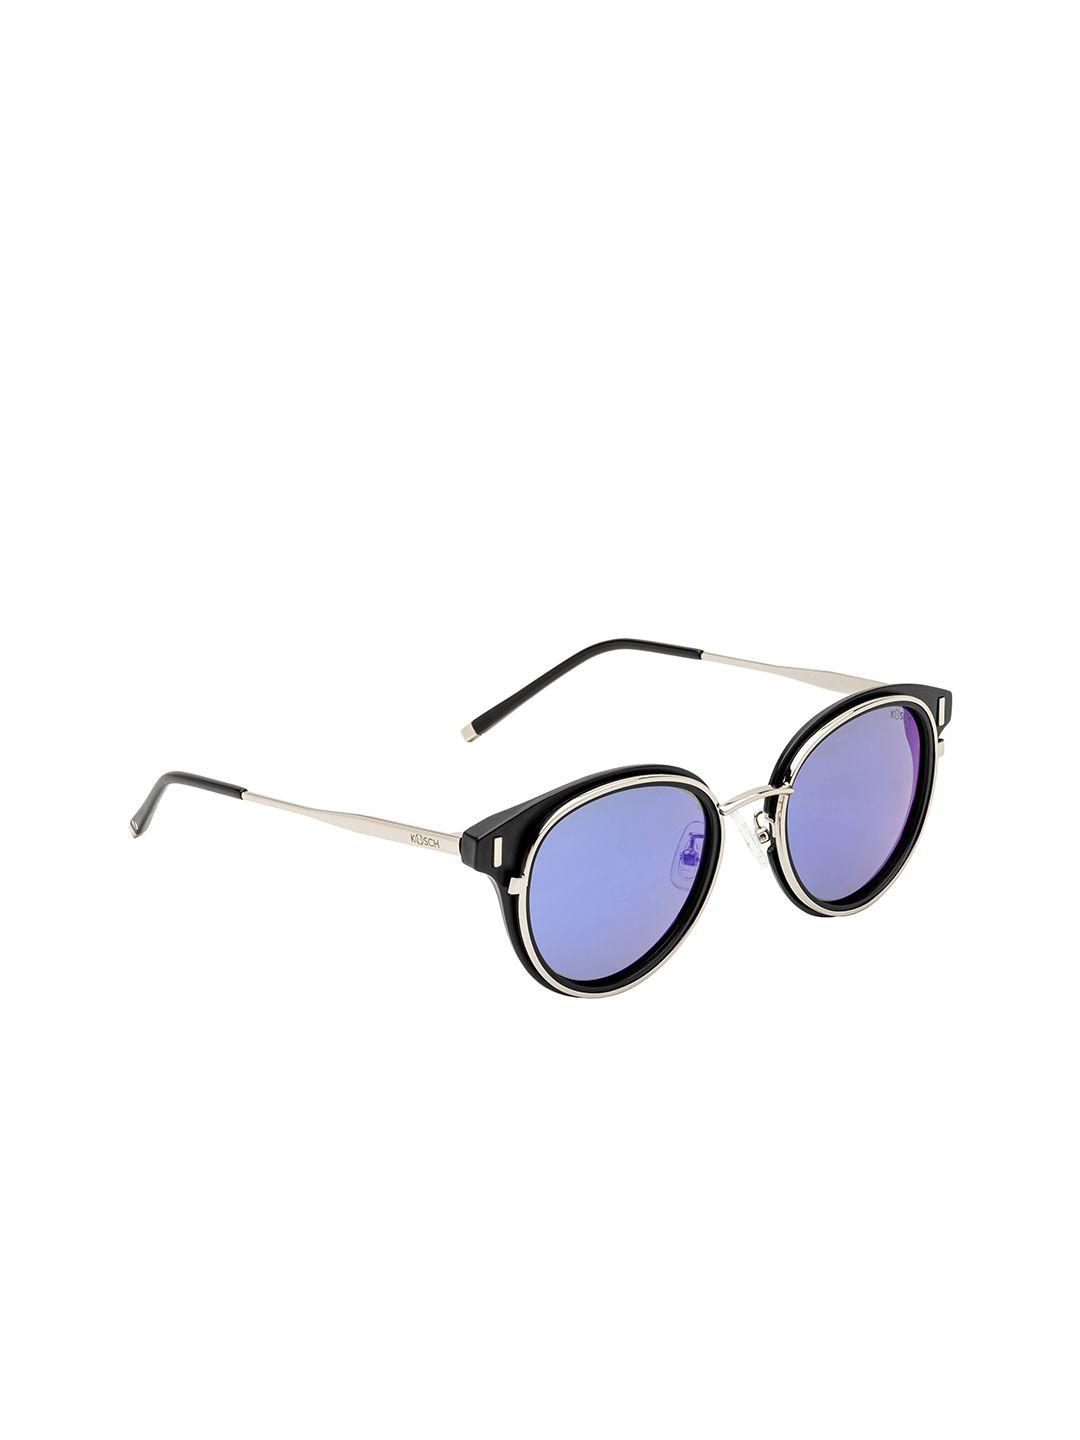 kosch elemente men blue lens & black round sunglasses with polarised lens ko 1005